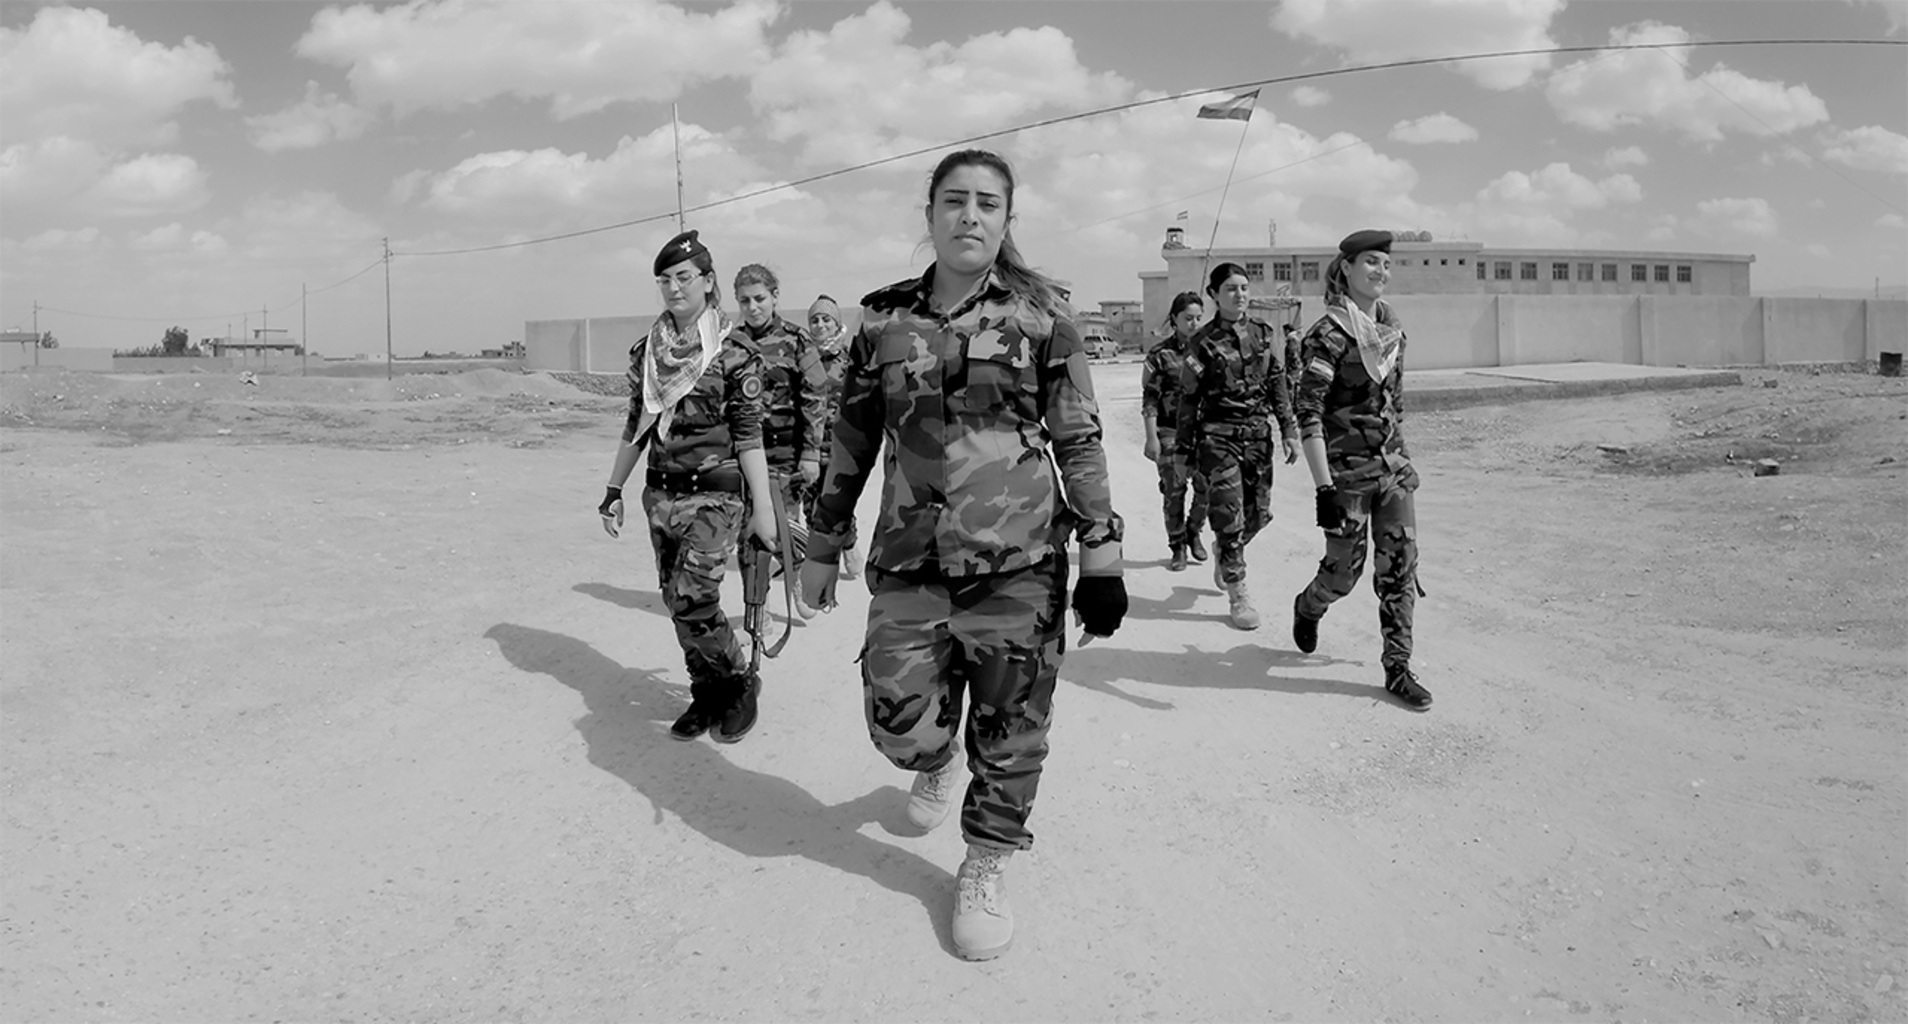 VR Film Highlights Female Empowerment in War